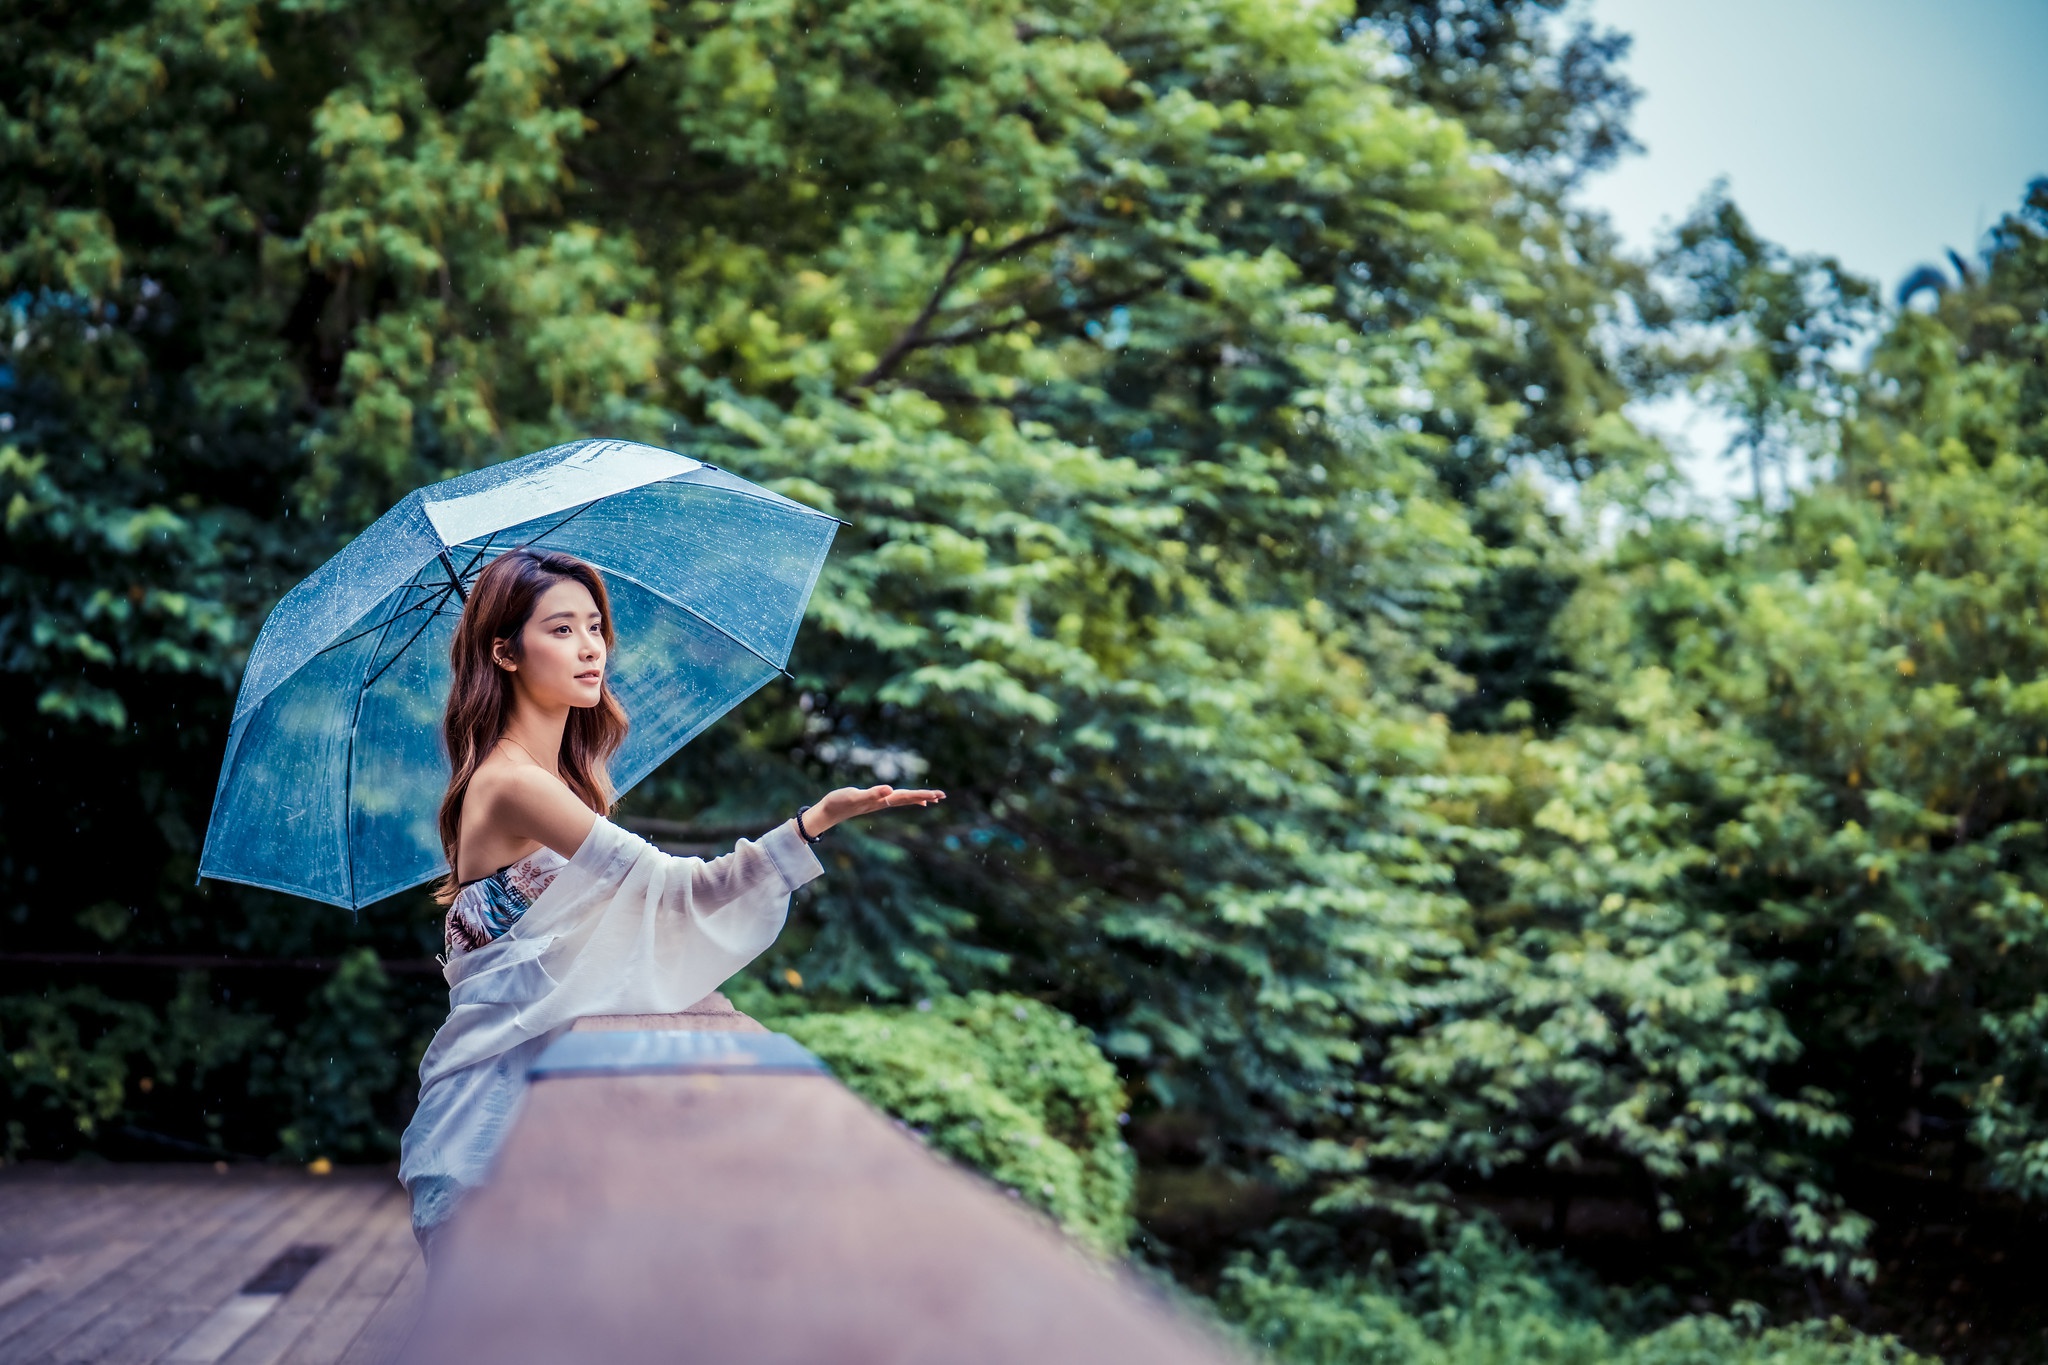 Asian Women Modding Long Hair Colette Brunel Dress Umbrella Trees Railings Bushes Hands 2048x1365